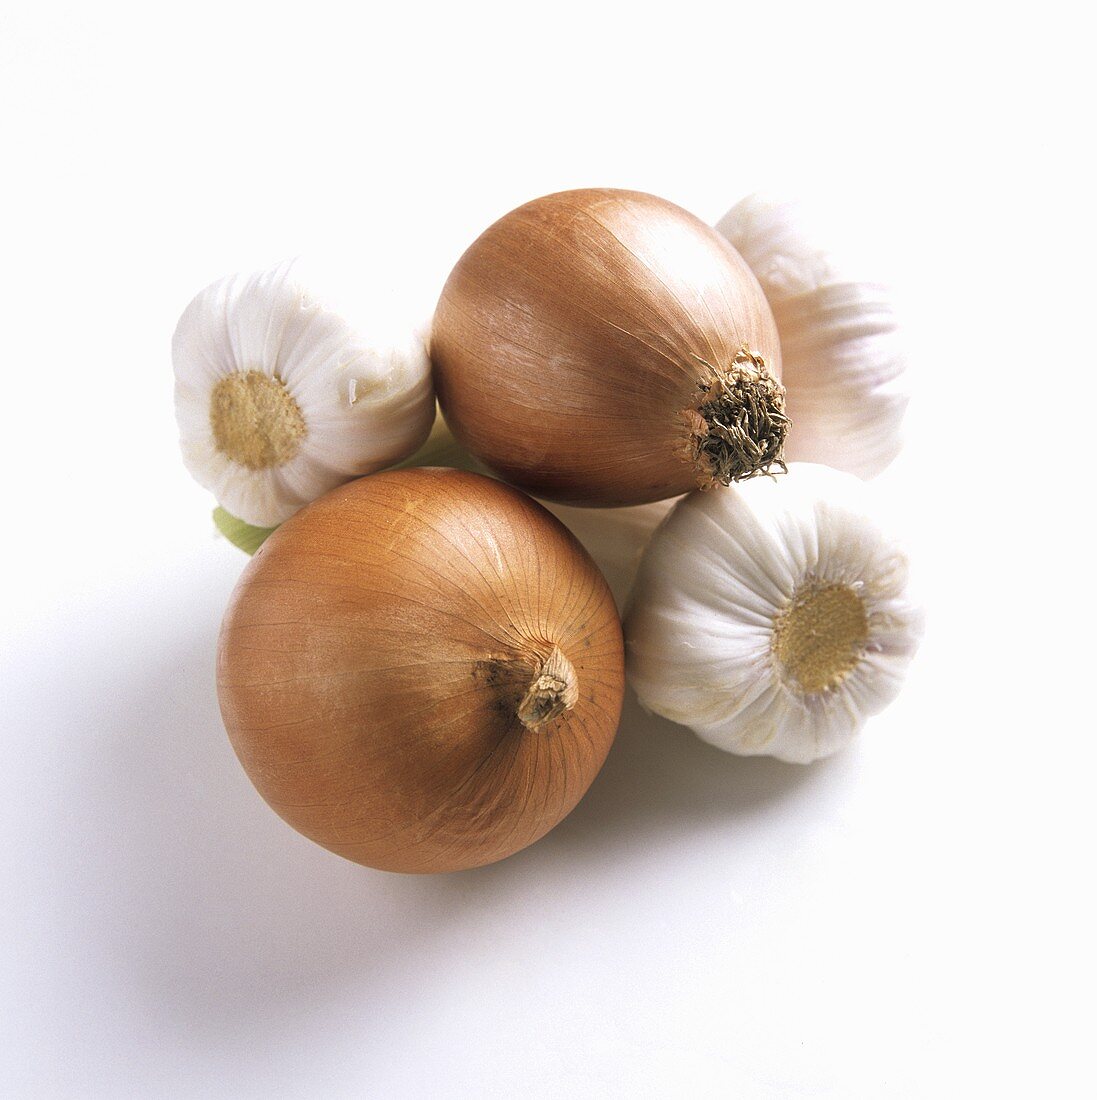 Two Yellow Onions and Three Garlic Bulbs